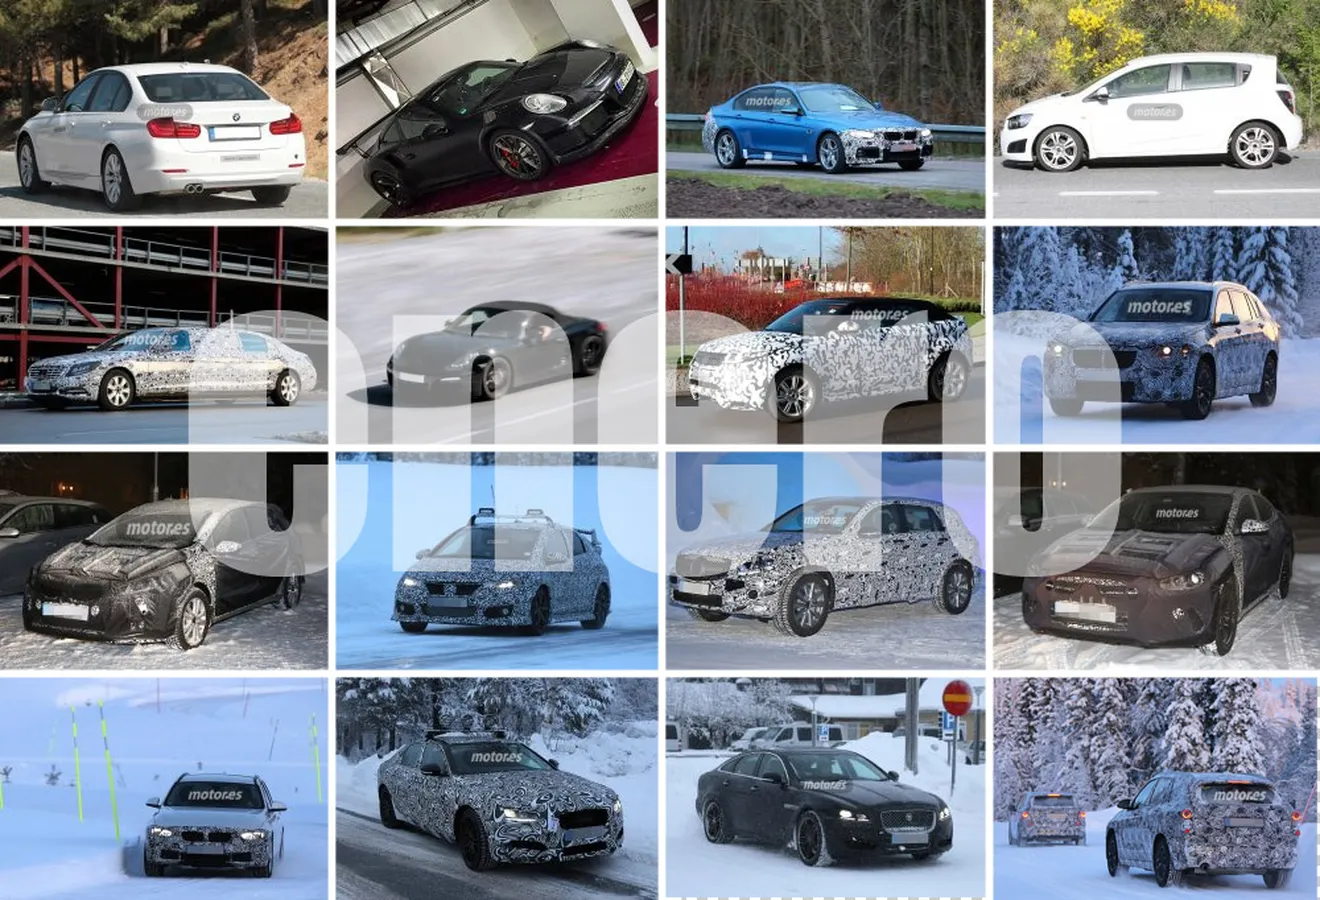 Lamborghini Aventador SV, Opel Corsa 2020, Audi A4 2016, Evoque Cabrio, BMW M2: Fotos espía Enero 2015